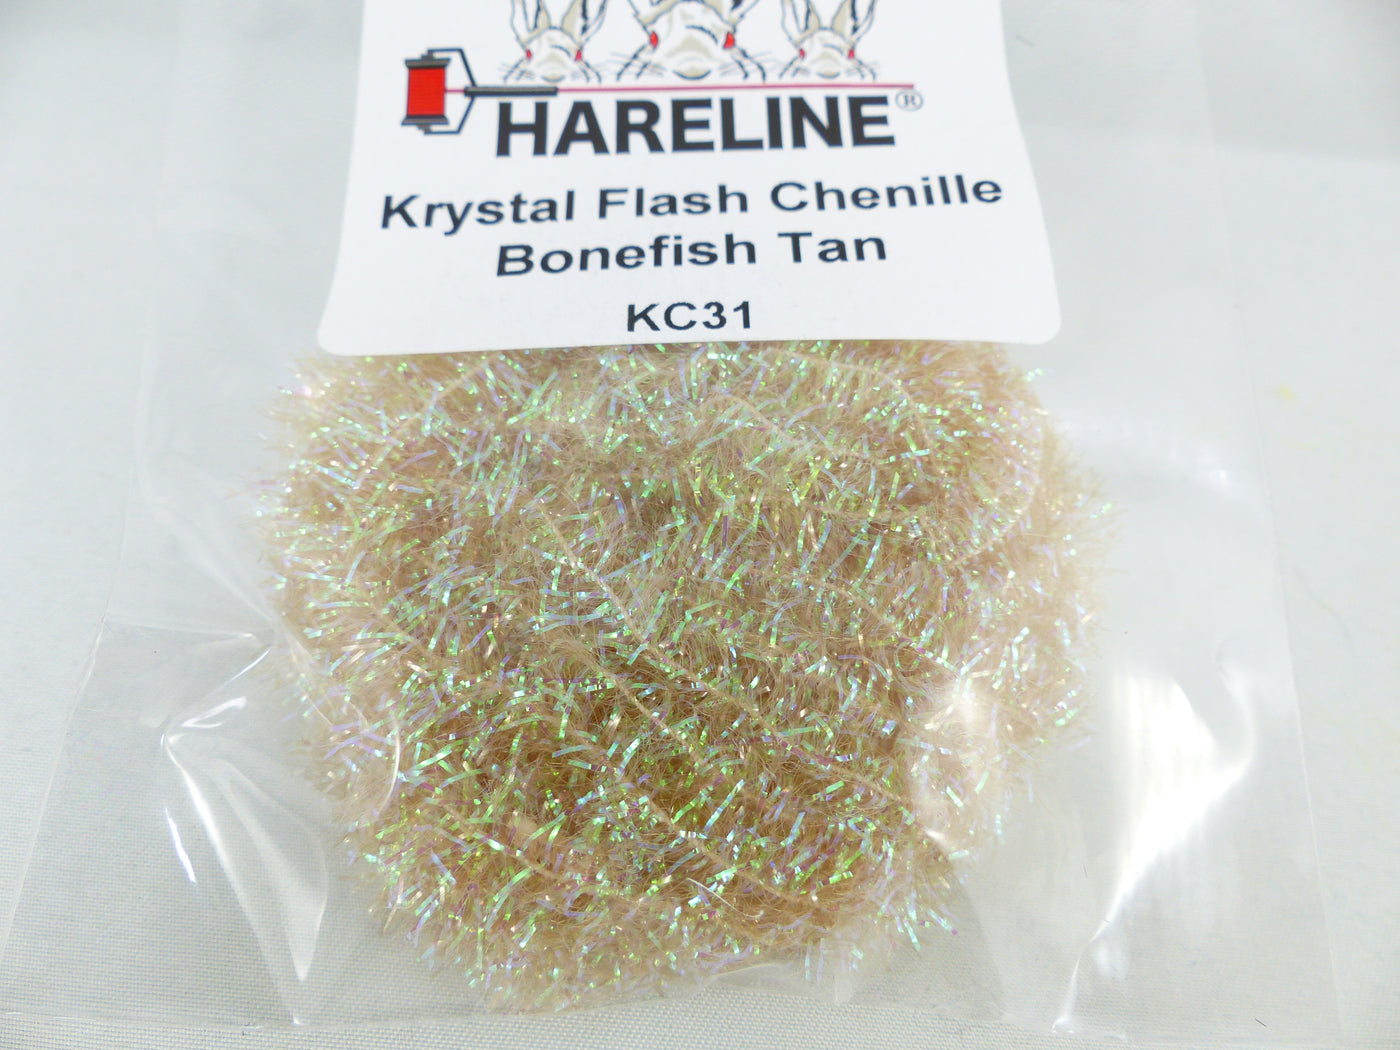 Krystal Flash Chenille Hareline